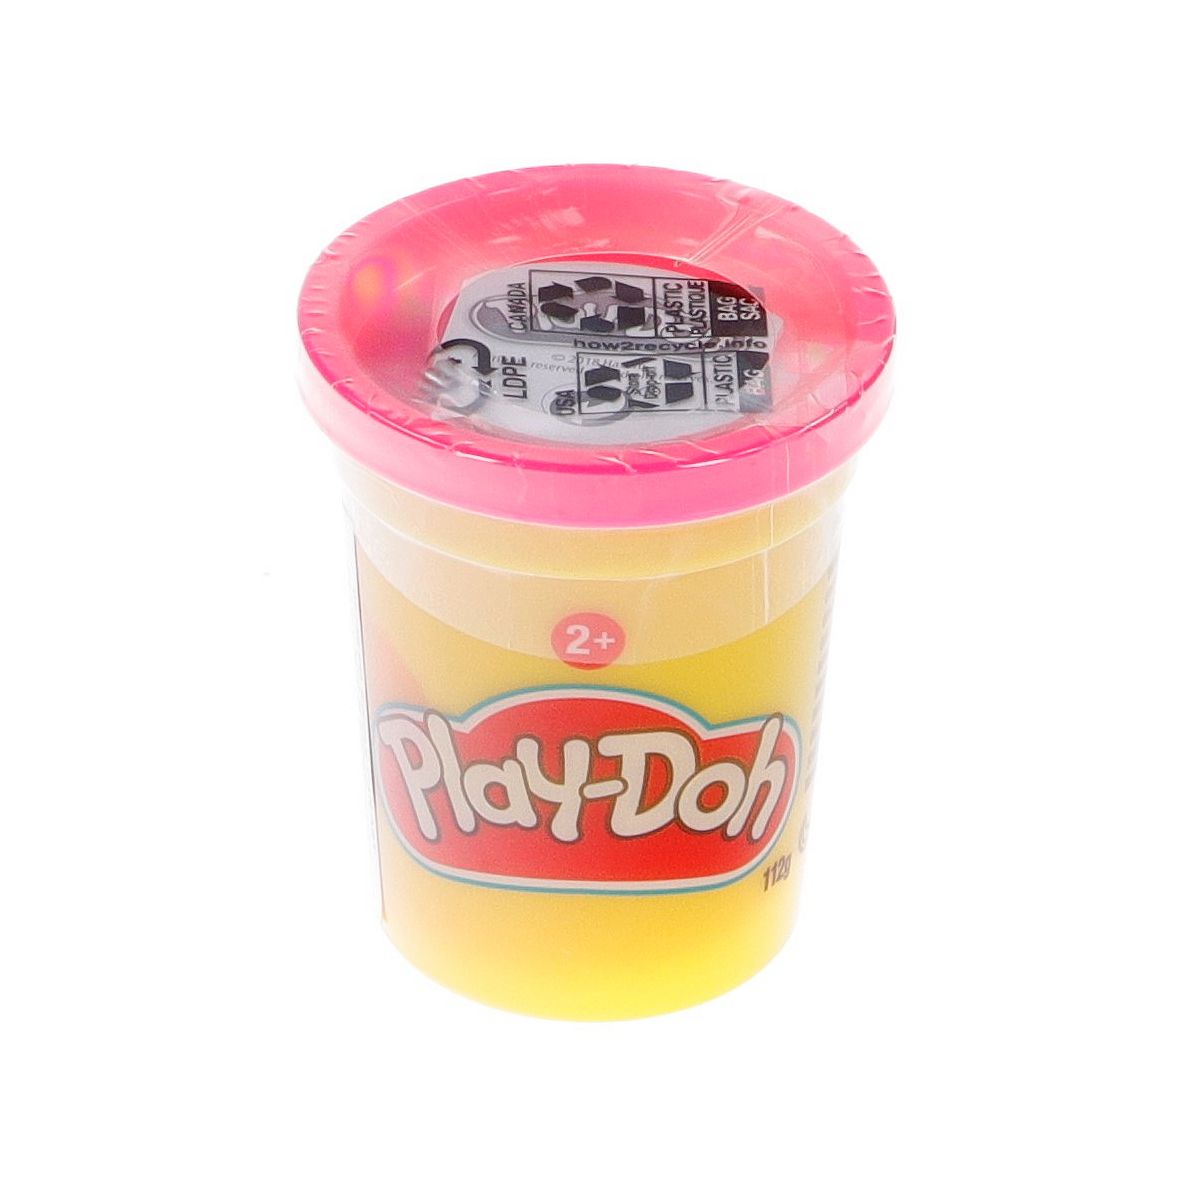 Ciastolina Hasbro 1 kol. fabryka śniechu play-doh 112g (B6756)